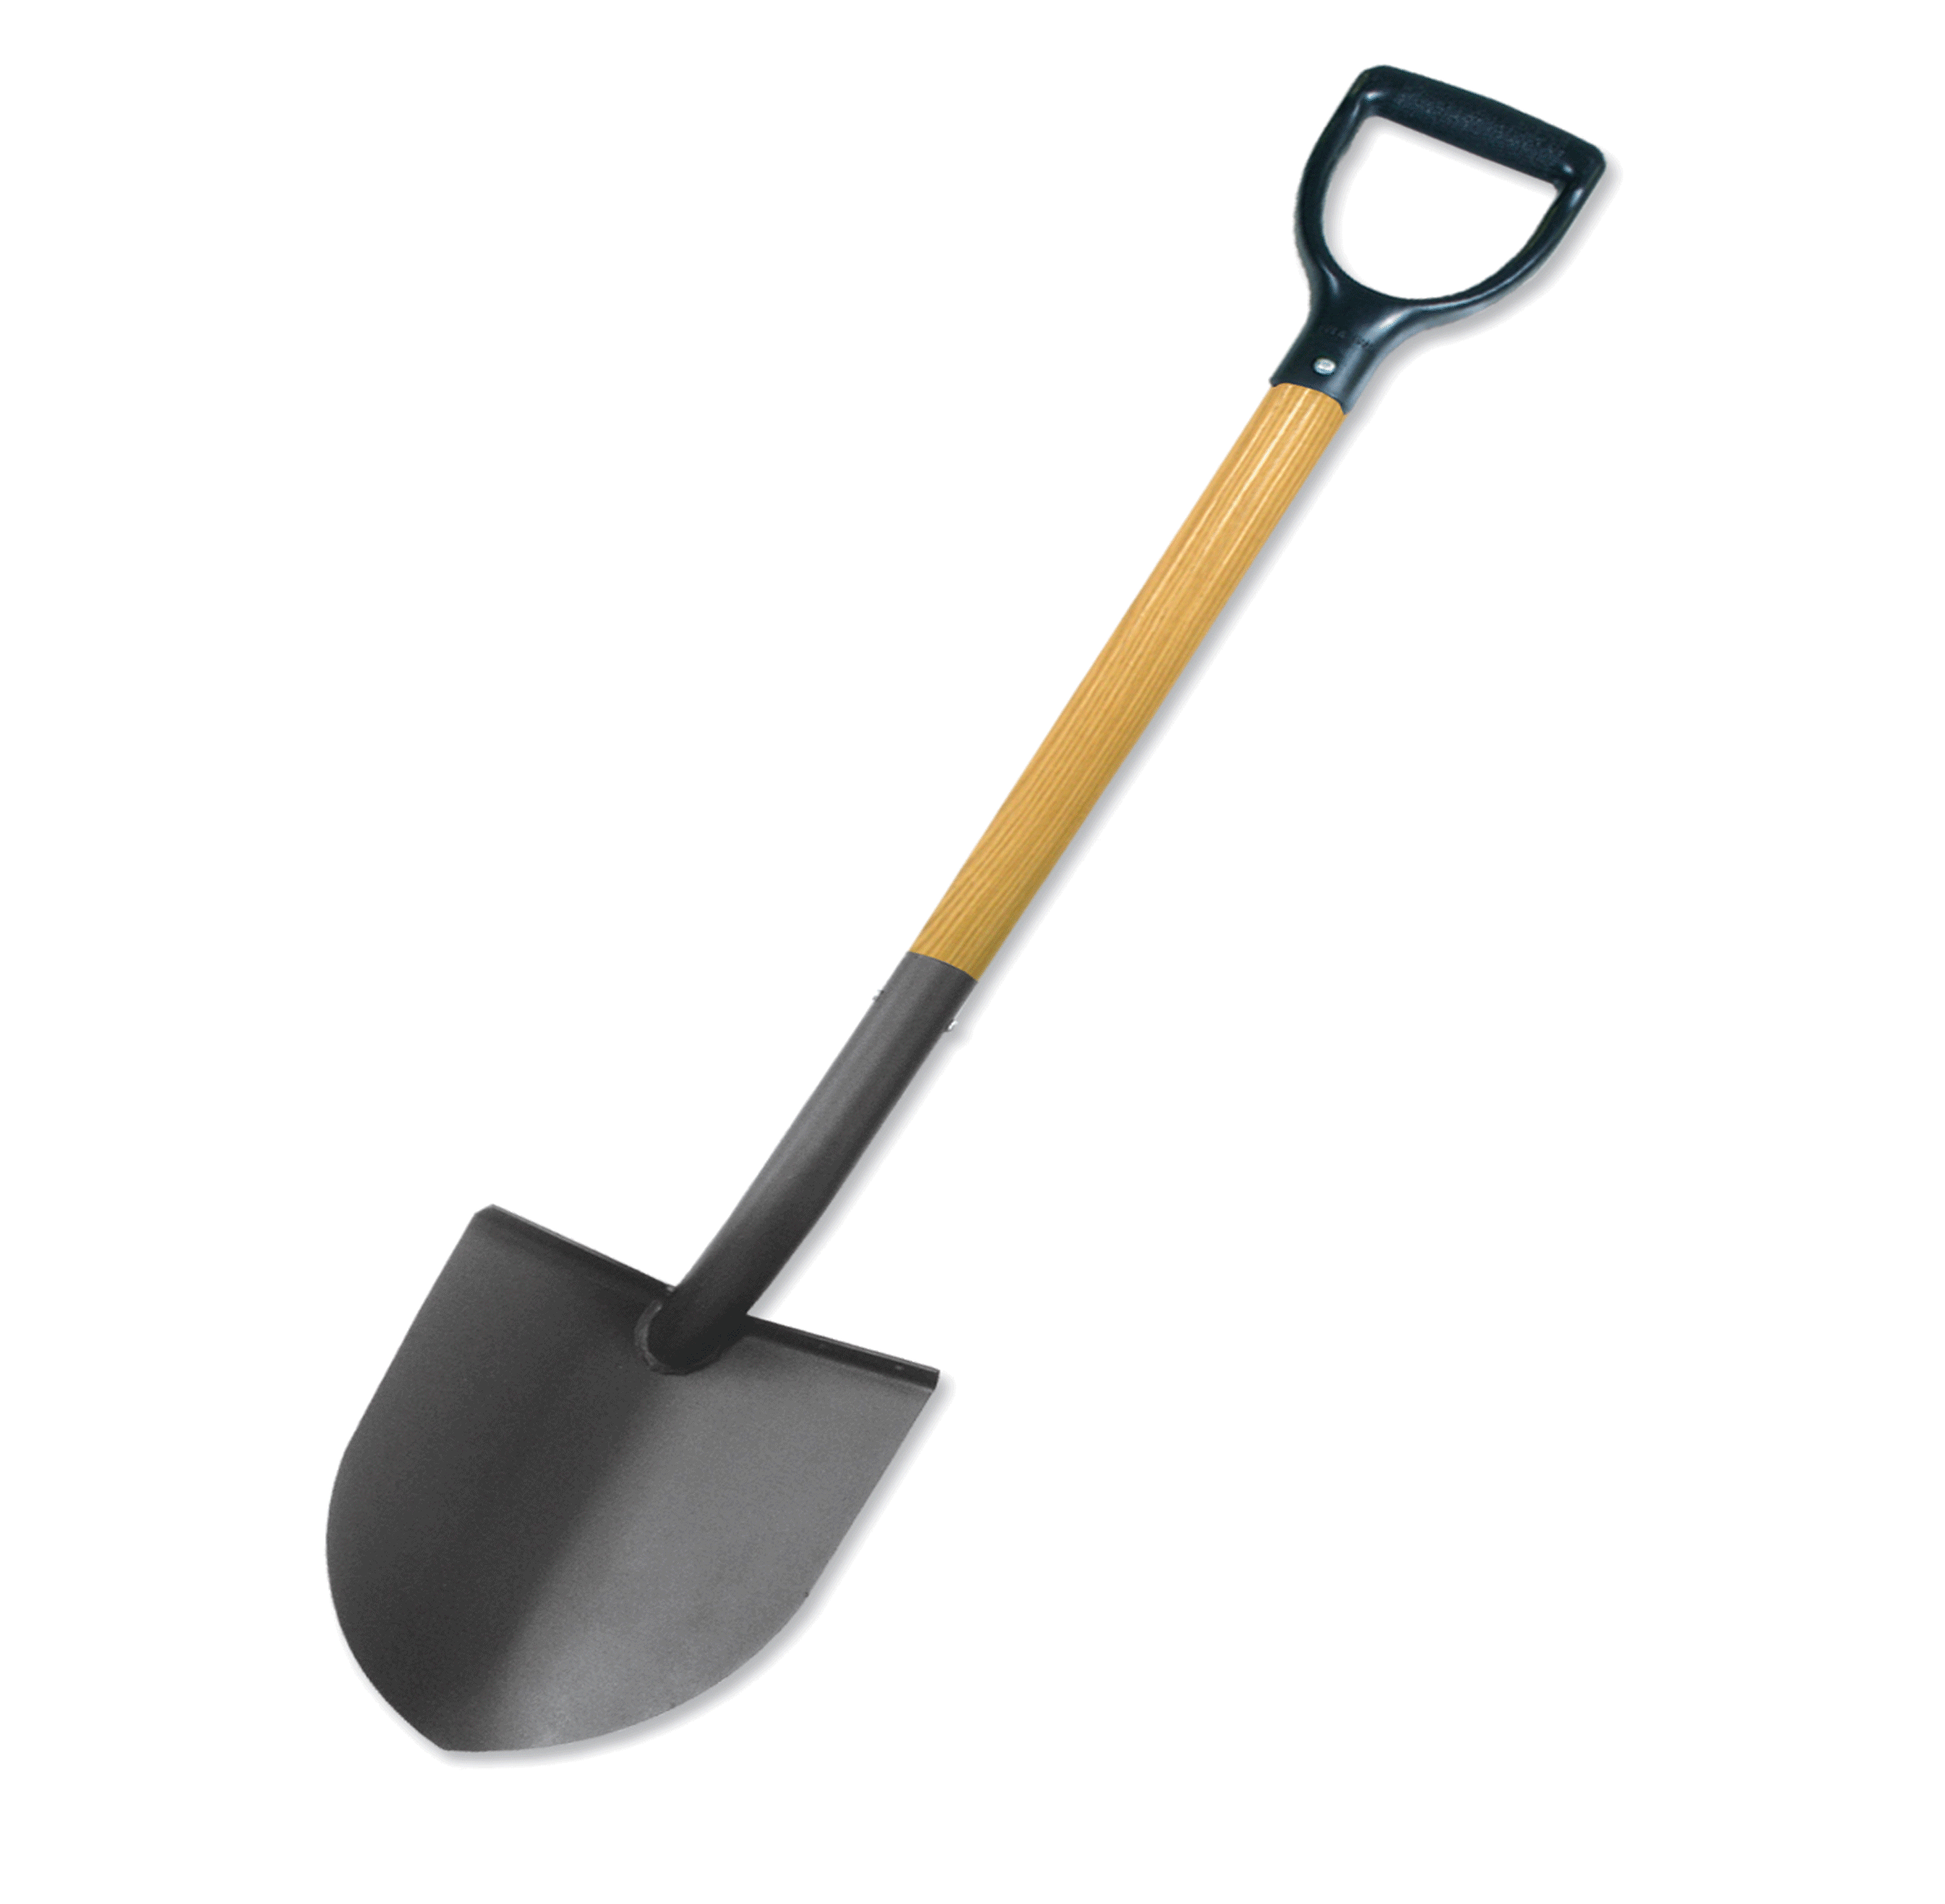 Cartoon shovel